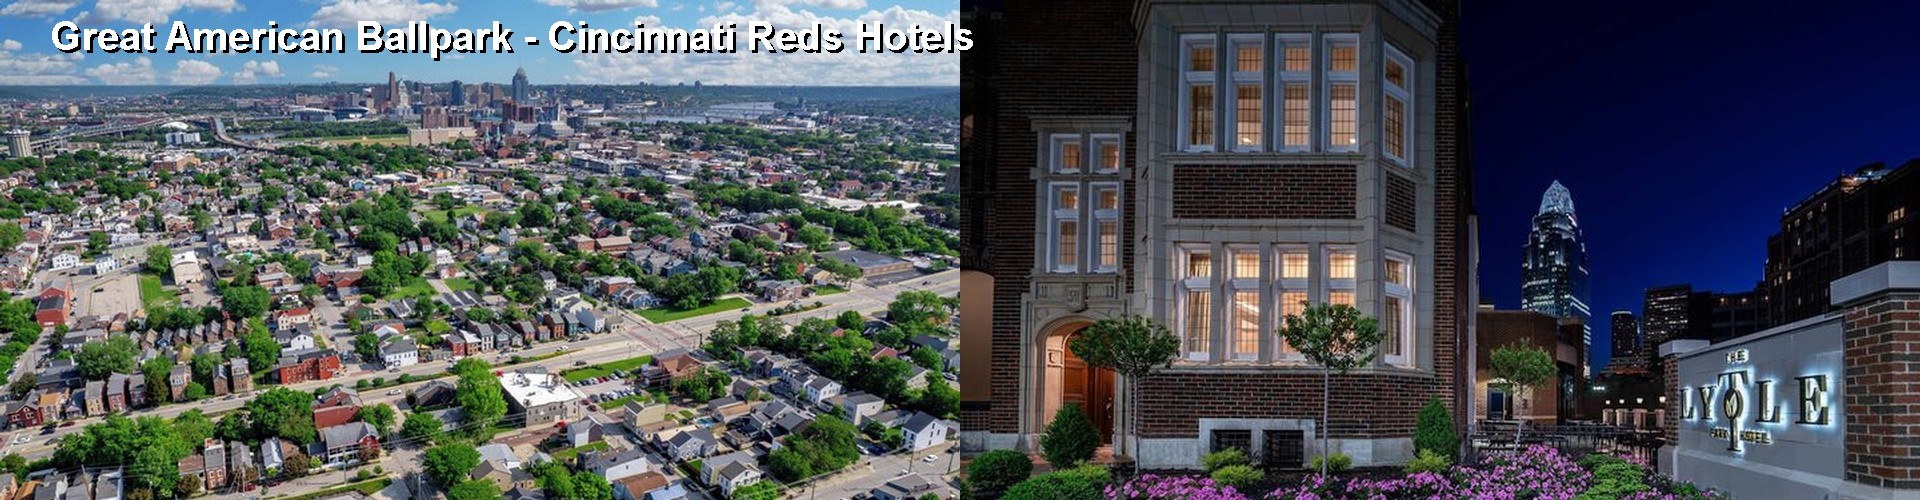 5 Best Hotels near Great American Ballpark - Cincinnati Reds